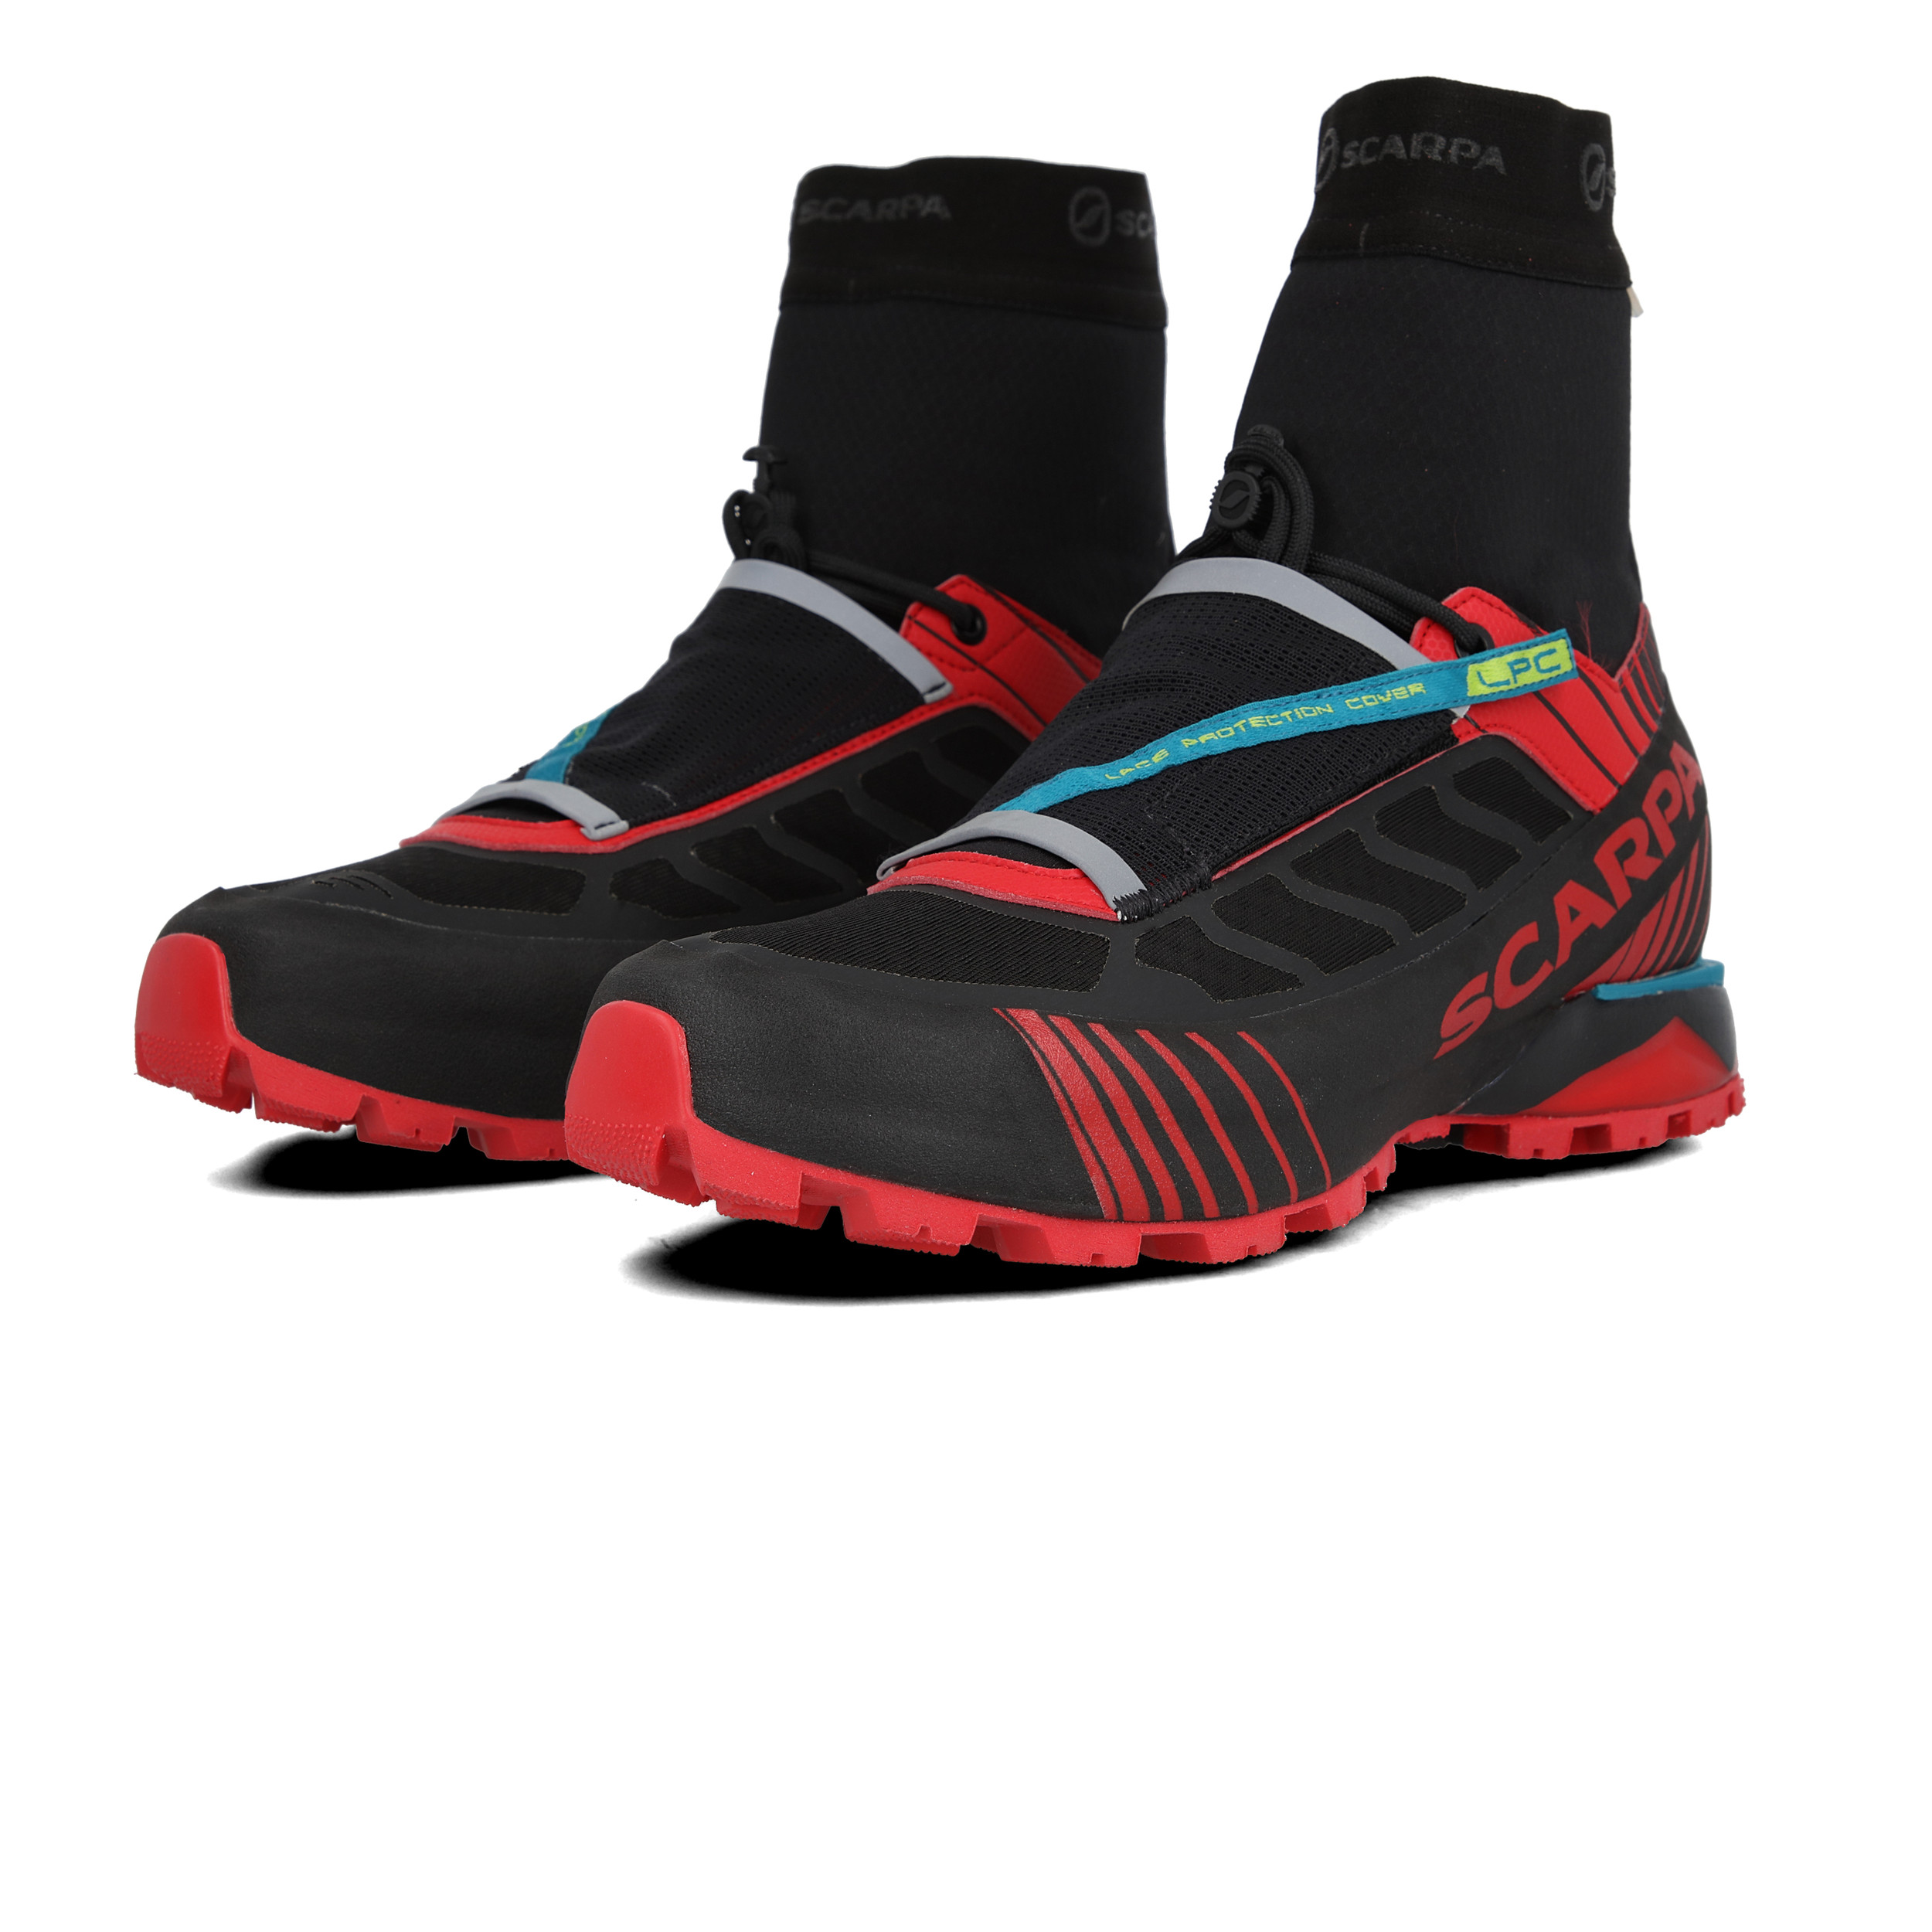 Scarpa Atom Tech OD Trail Running Shoes